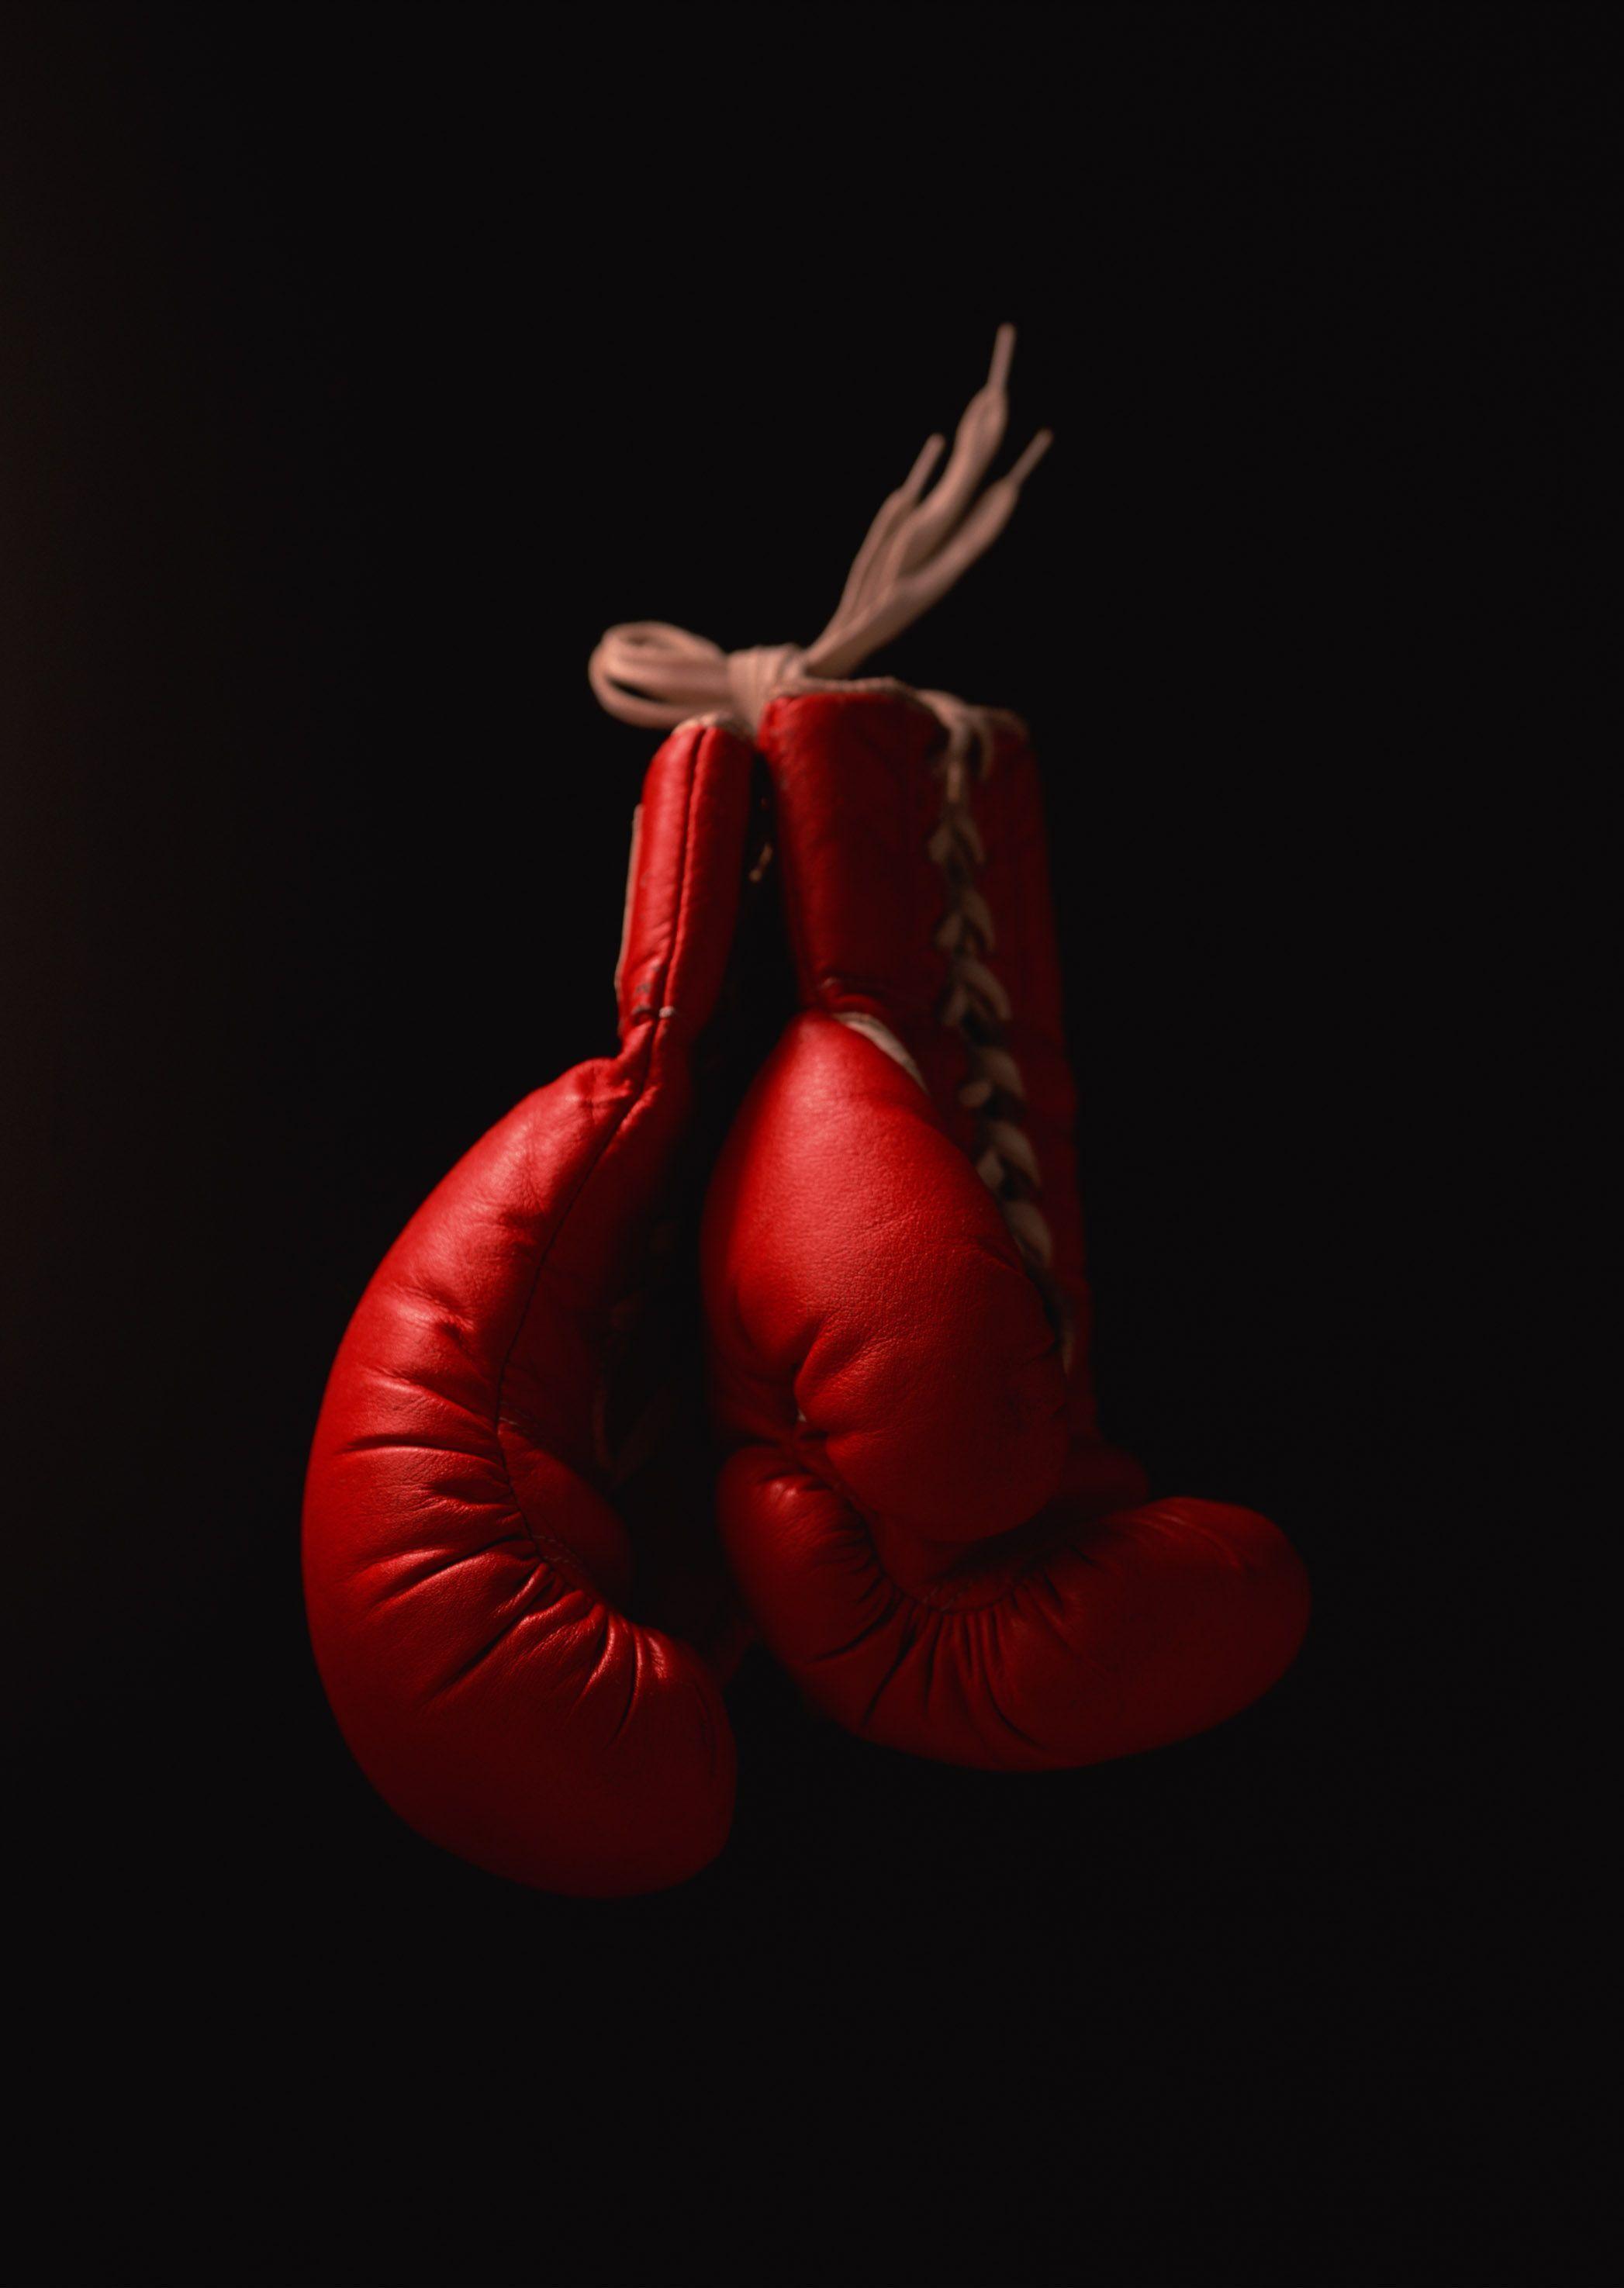 Boxing Gloves Wallpaper. Image Wallpaper